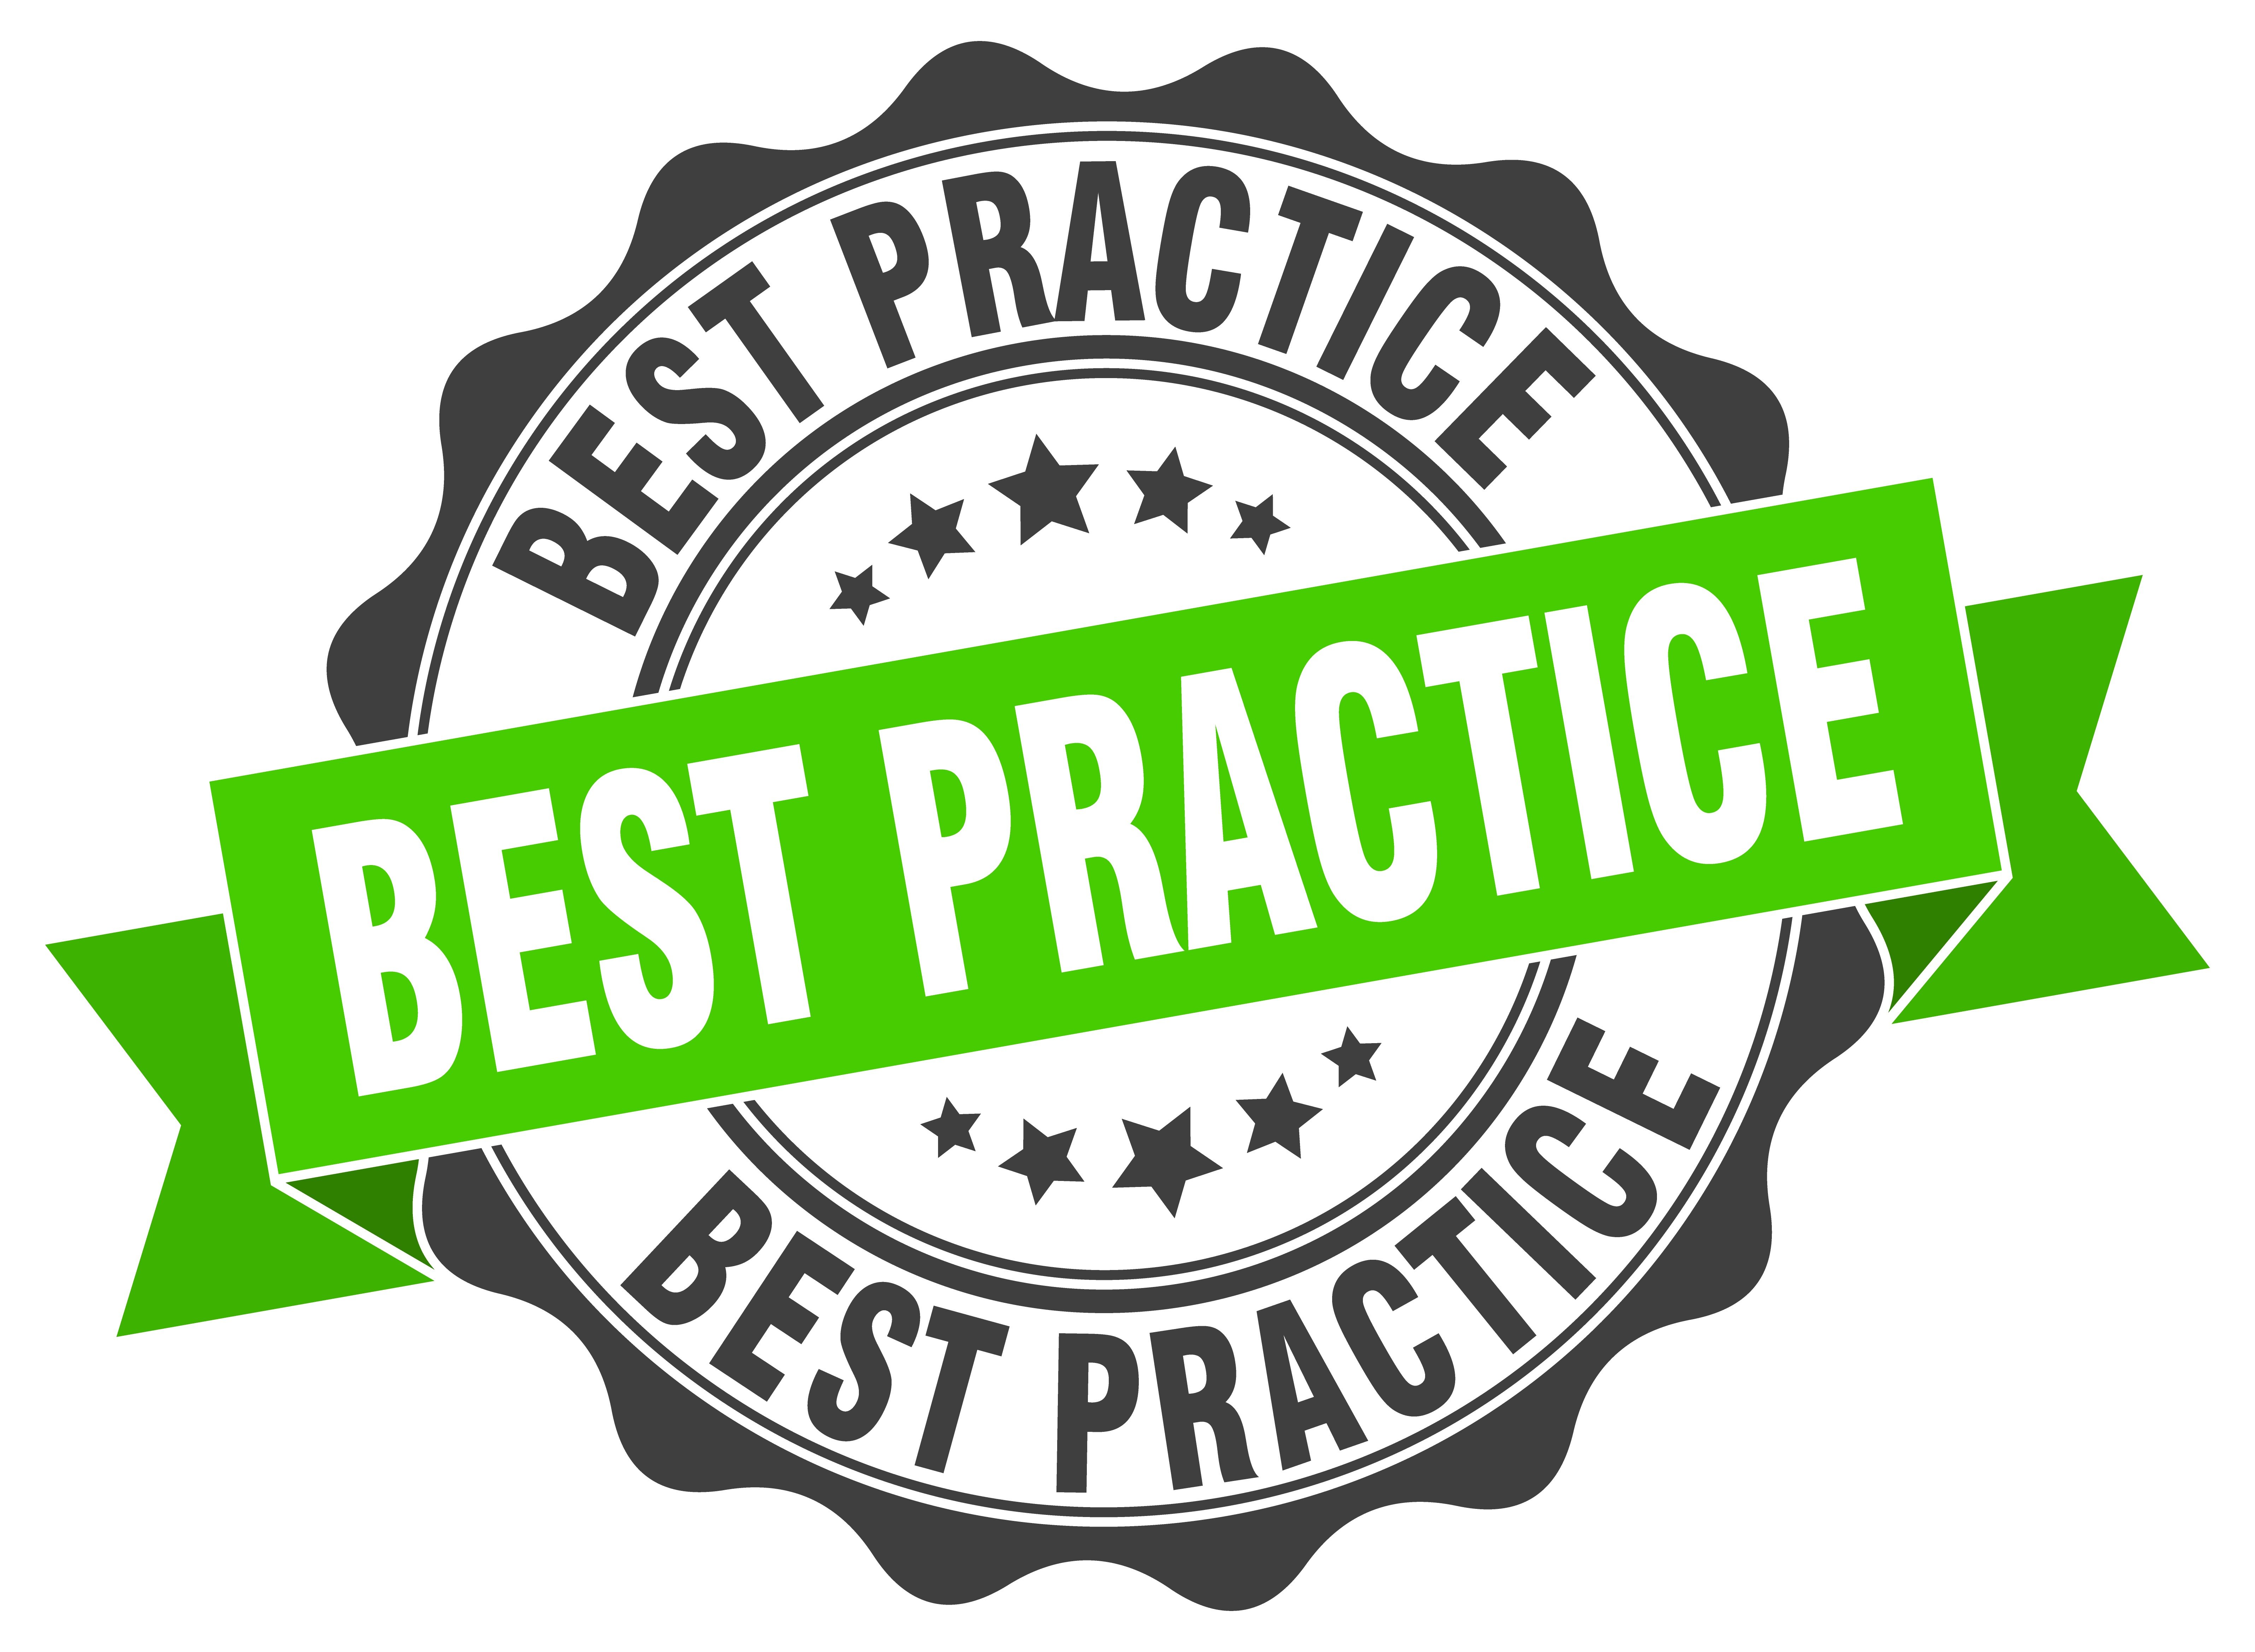 Summer Learning Program Promotion and Registration Best Practices